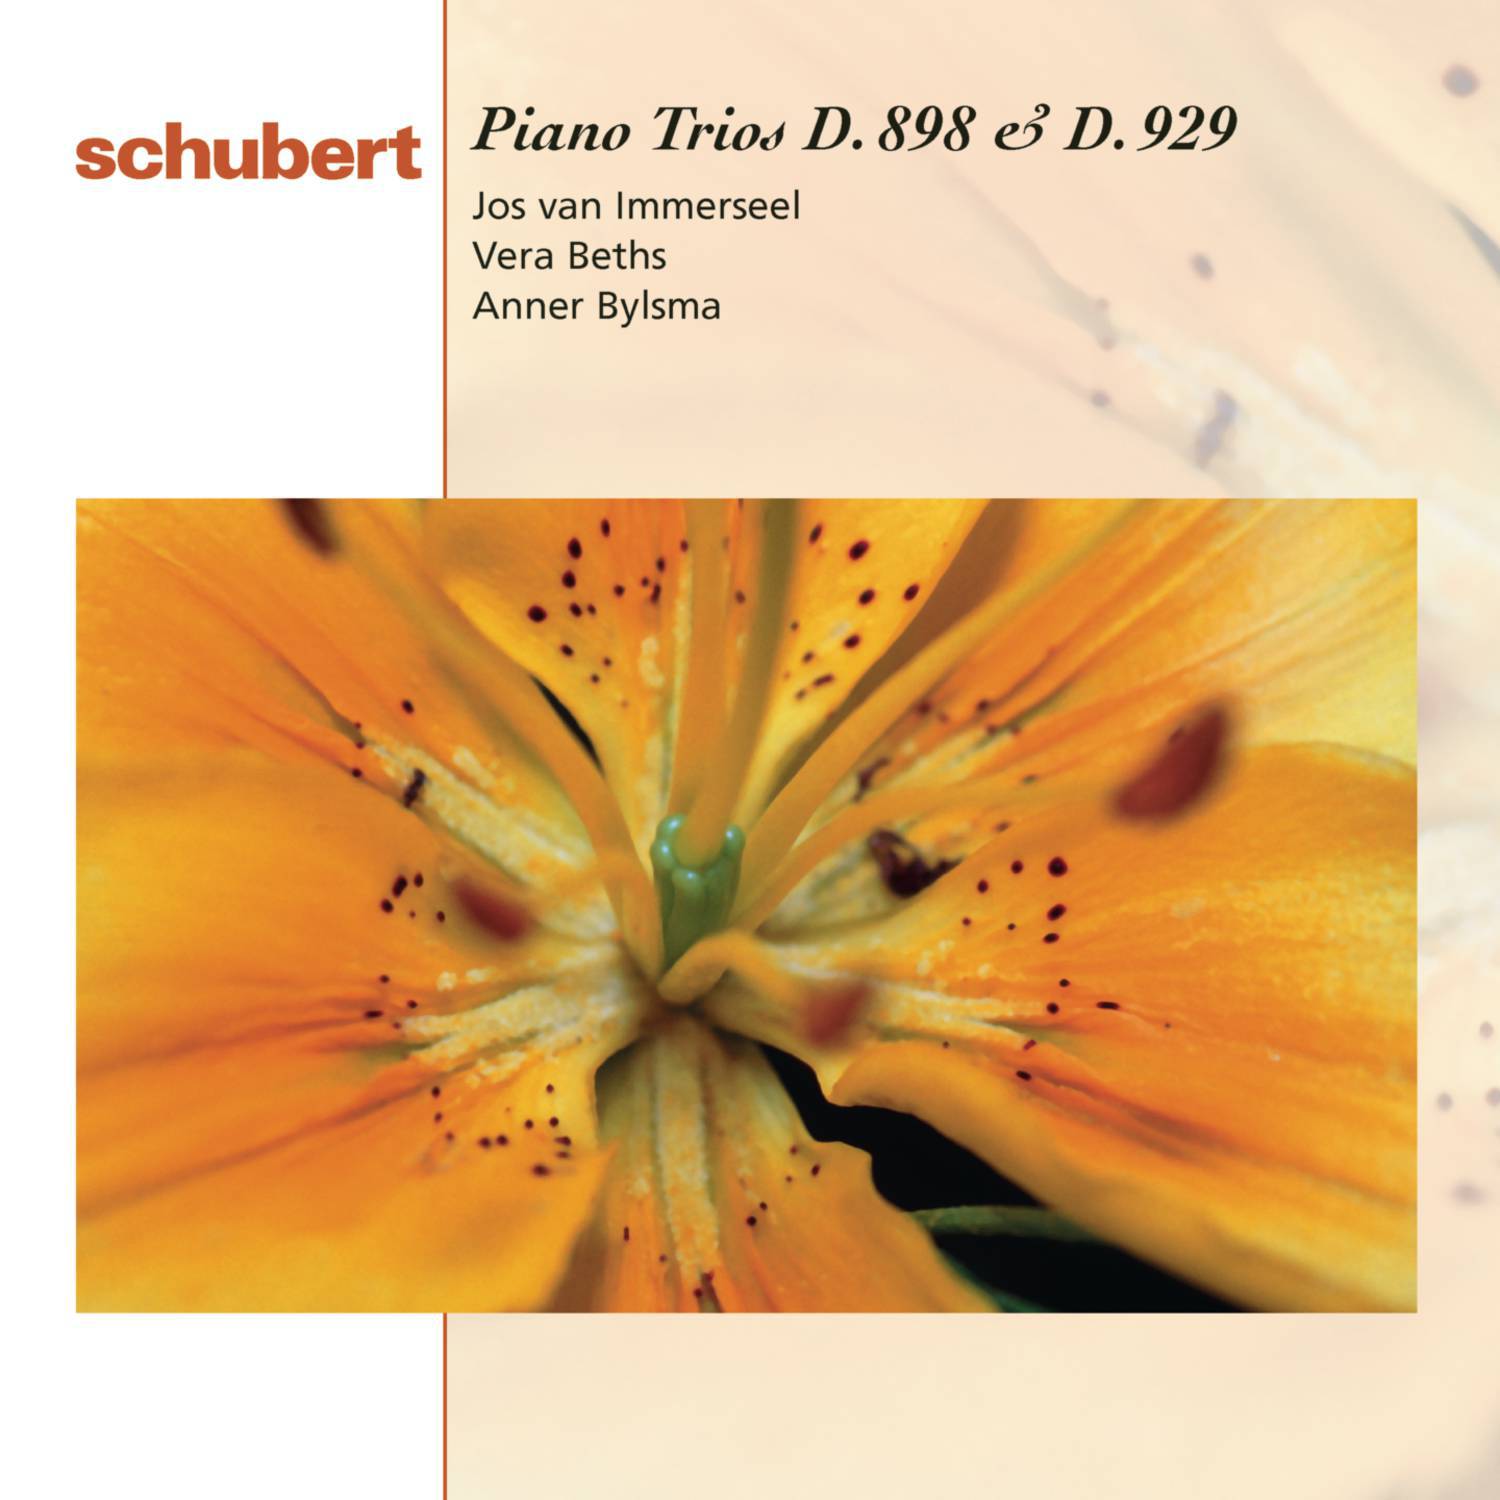 Piano Trio No. 2 in E-Flat Major, D. 929, Op. 100: I. Allegro